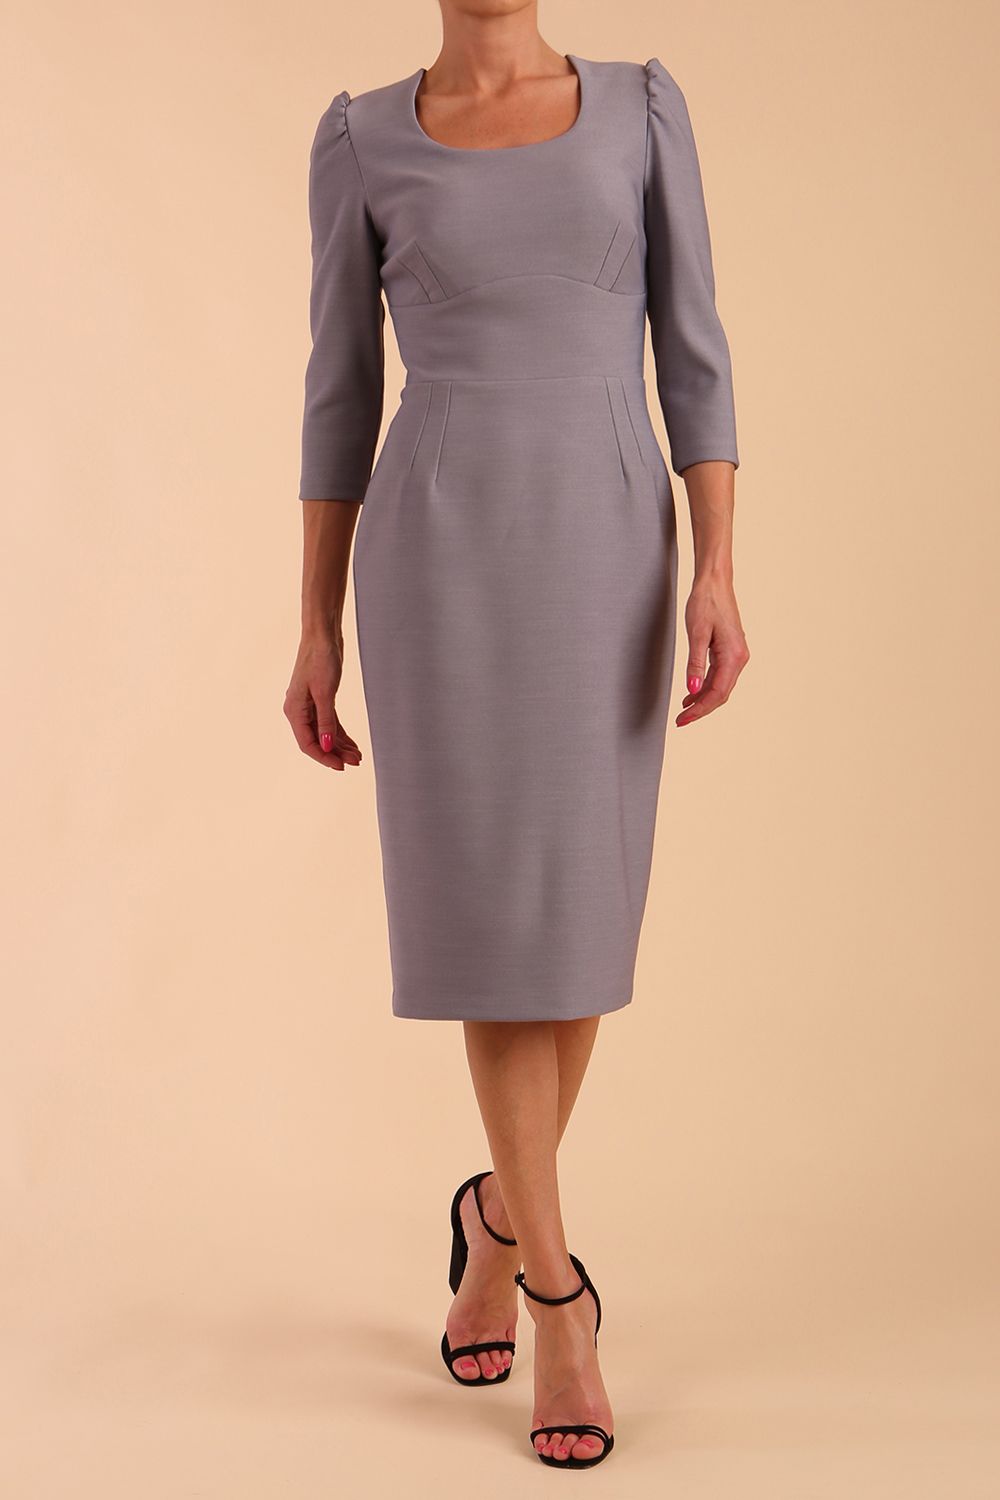 Model wearing diva catwalk Aurelia 3/4 Sleeve Knee Lenght Pencil Dress in Sky Grey front